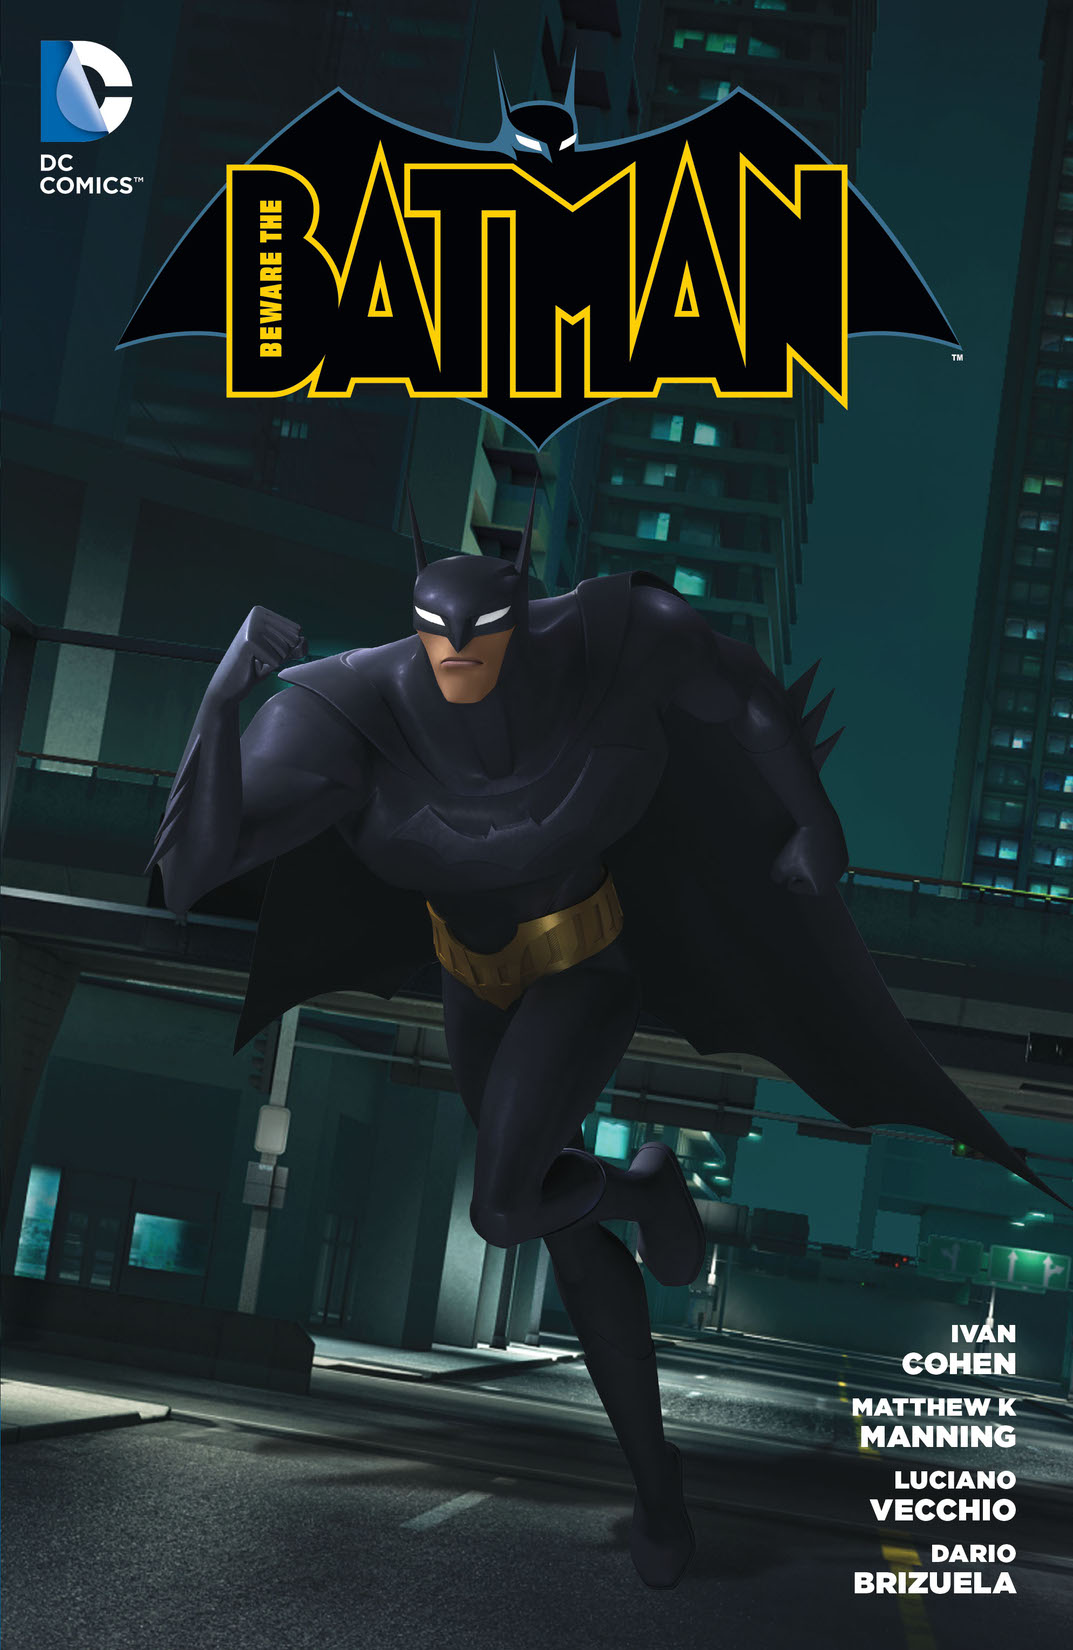 Beware the Batman Vol. 1 preview images